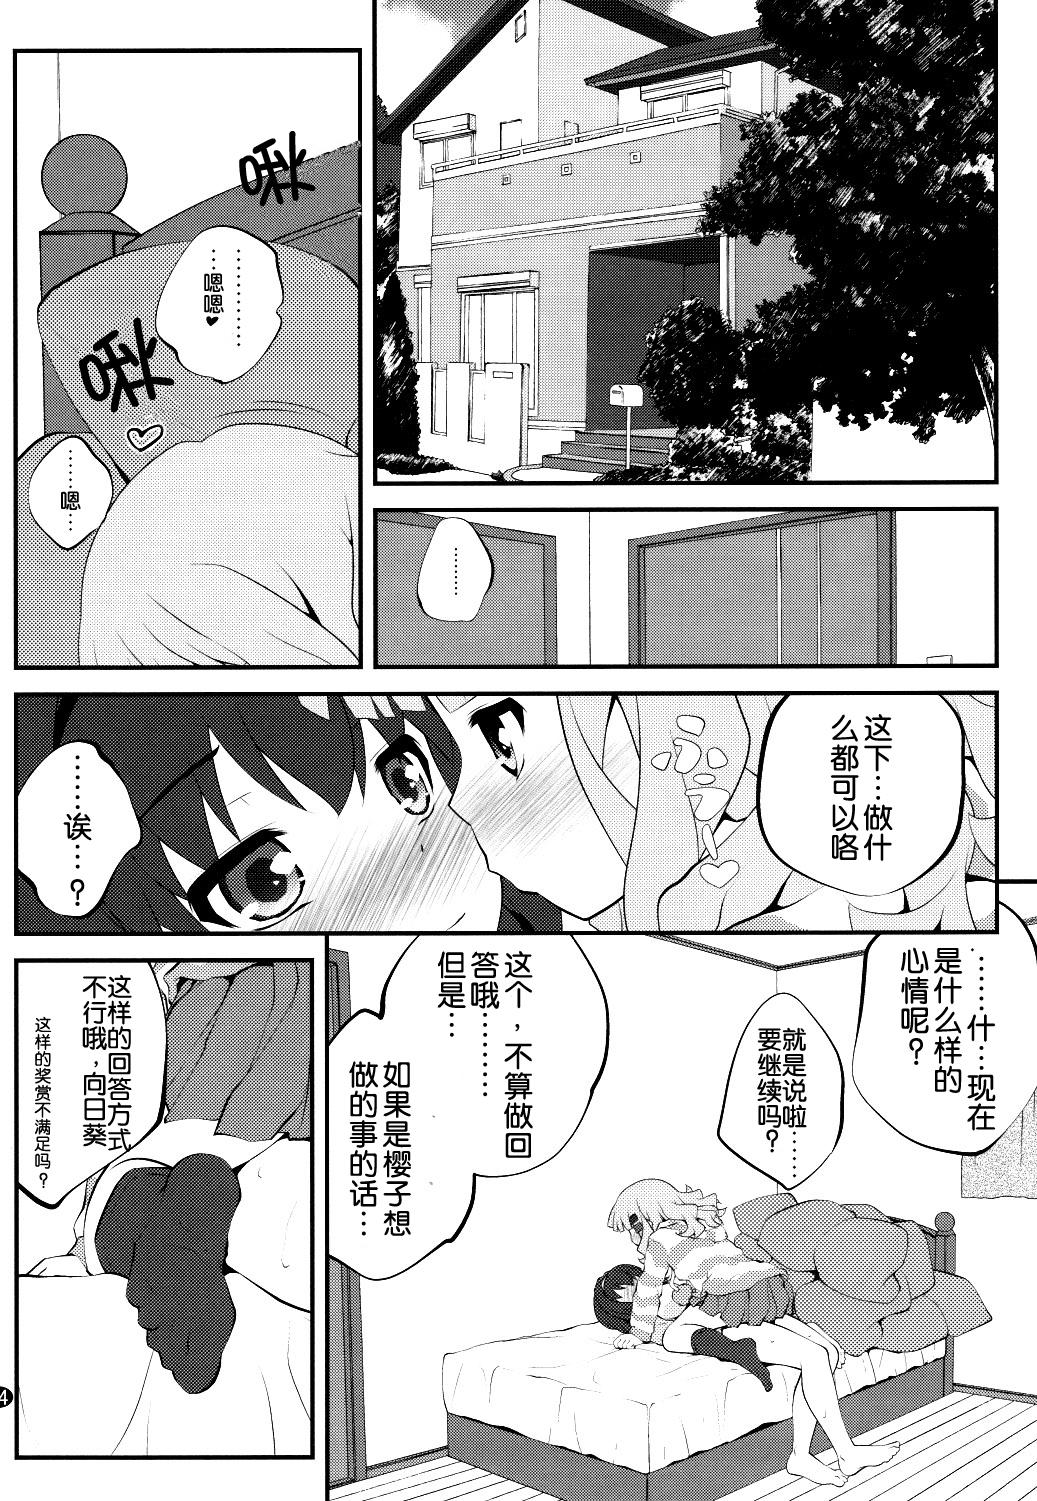 Femdom Himegoto Flowers 7 - Yuruyuri Analsex - Page 4